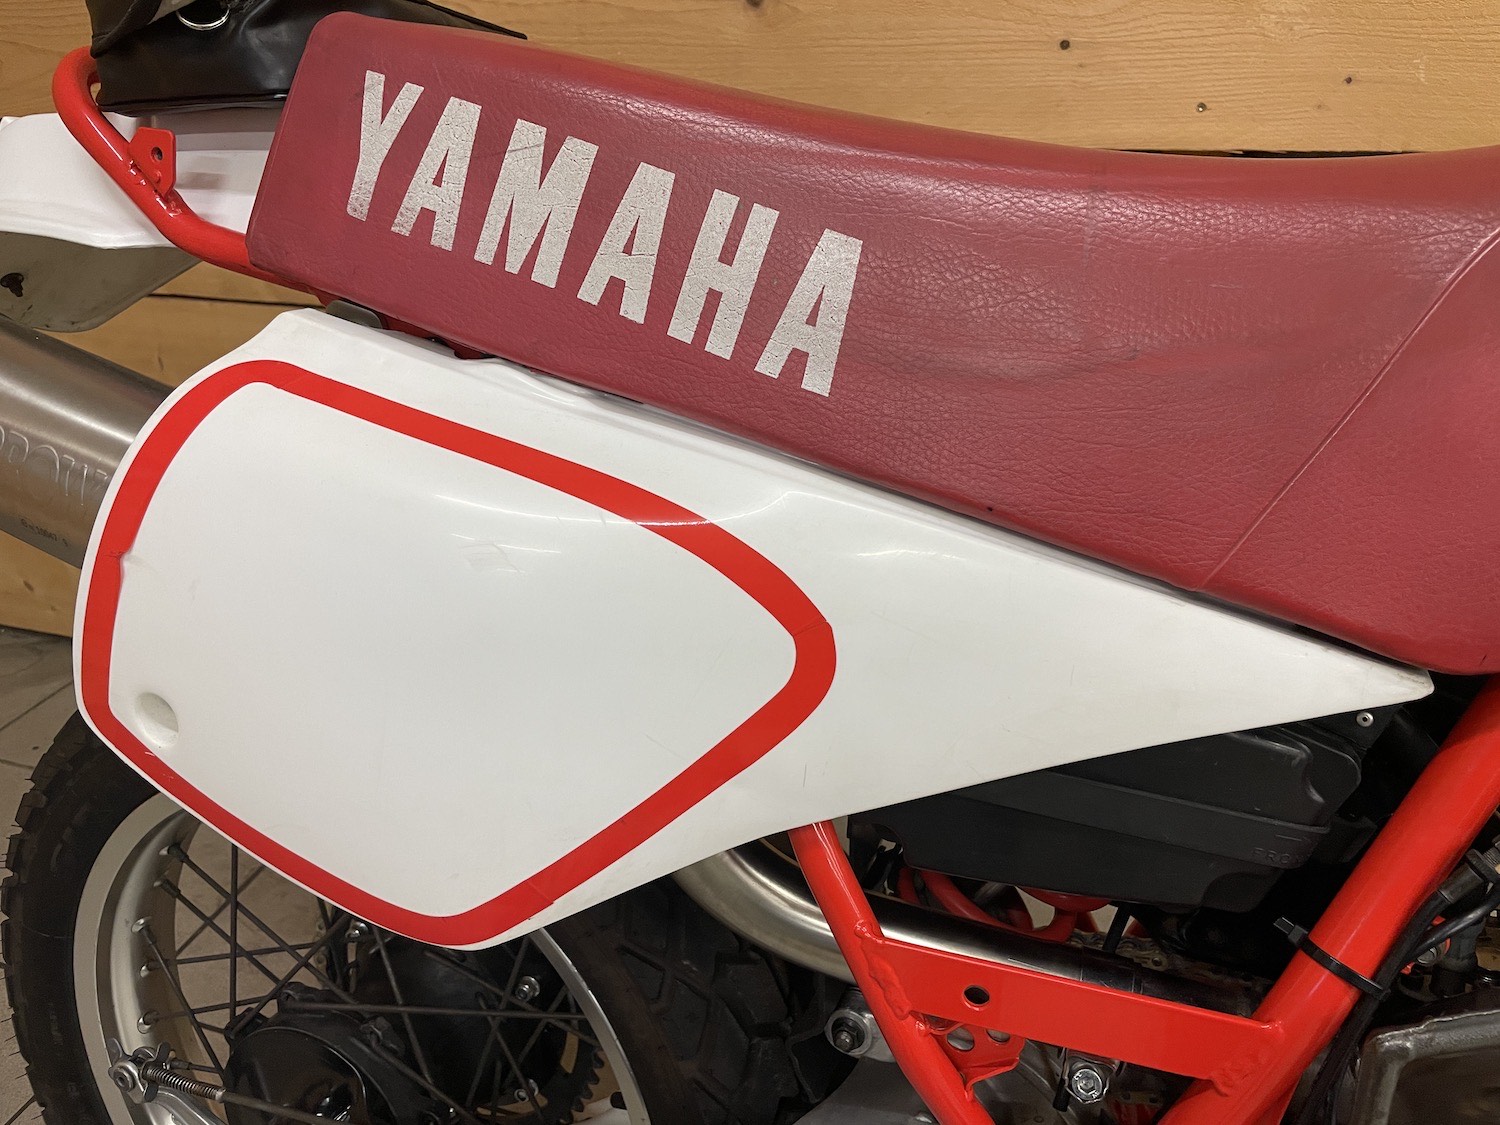 Yamaha_TT600_88_cezanne_classic_motorcycle_4-101.jpg